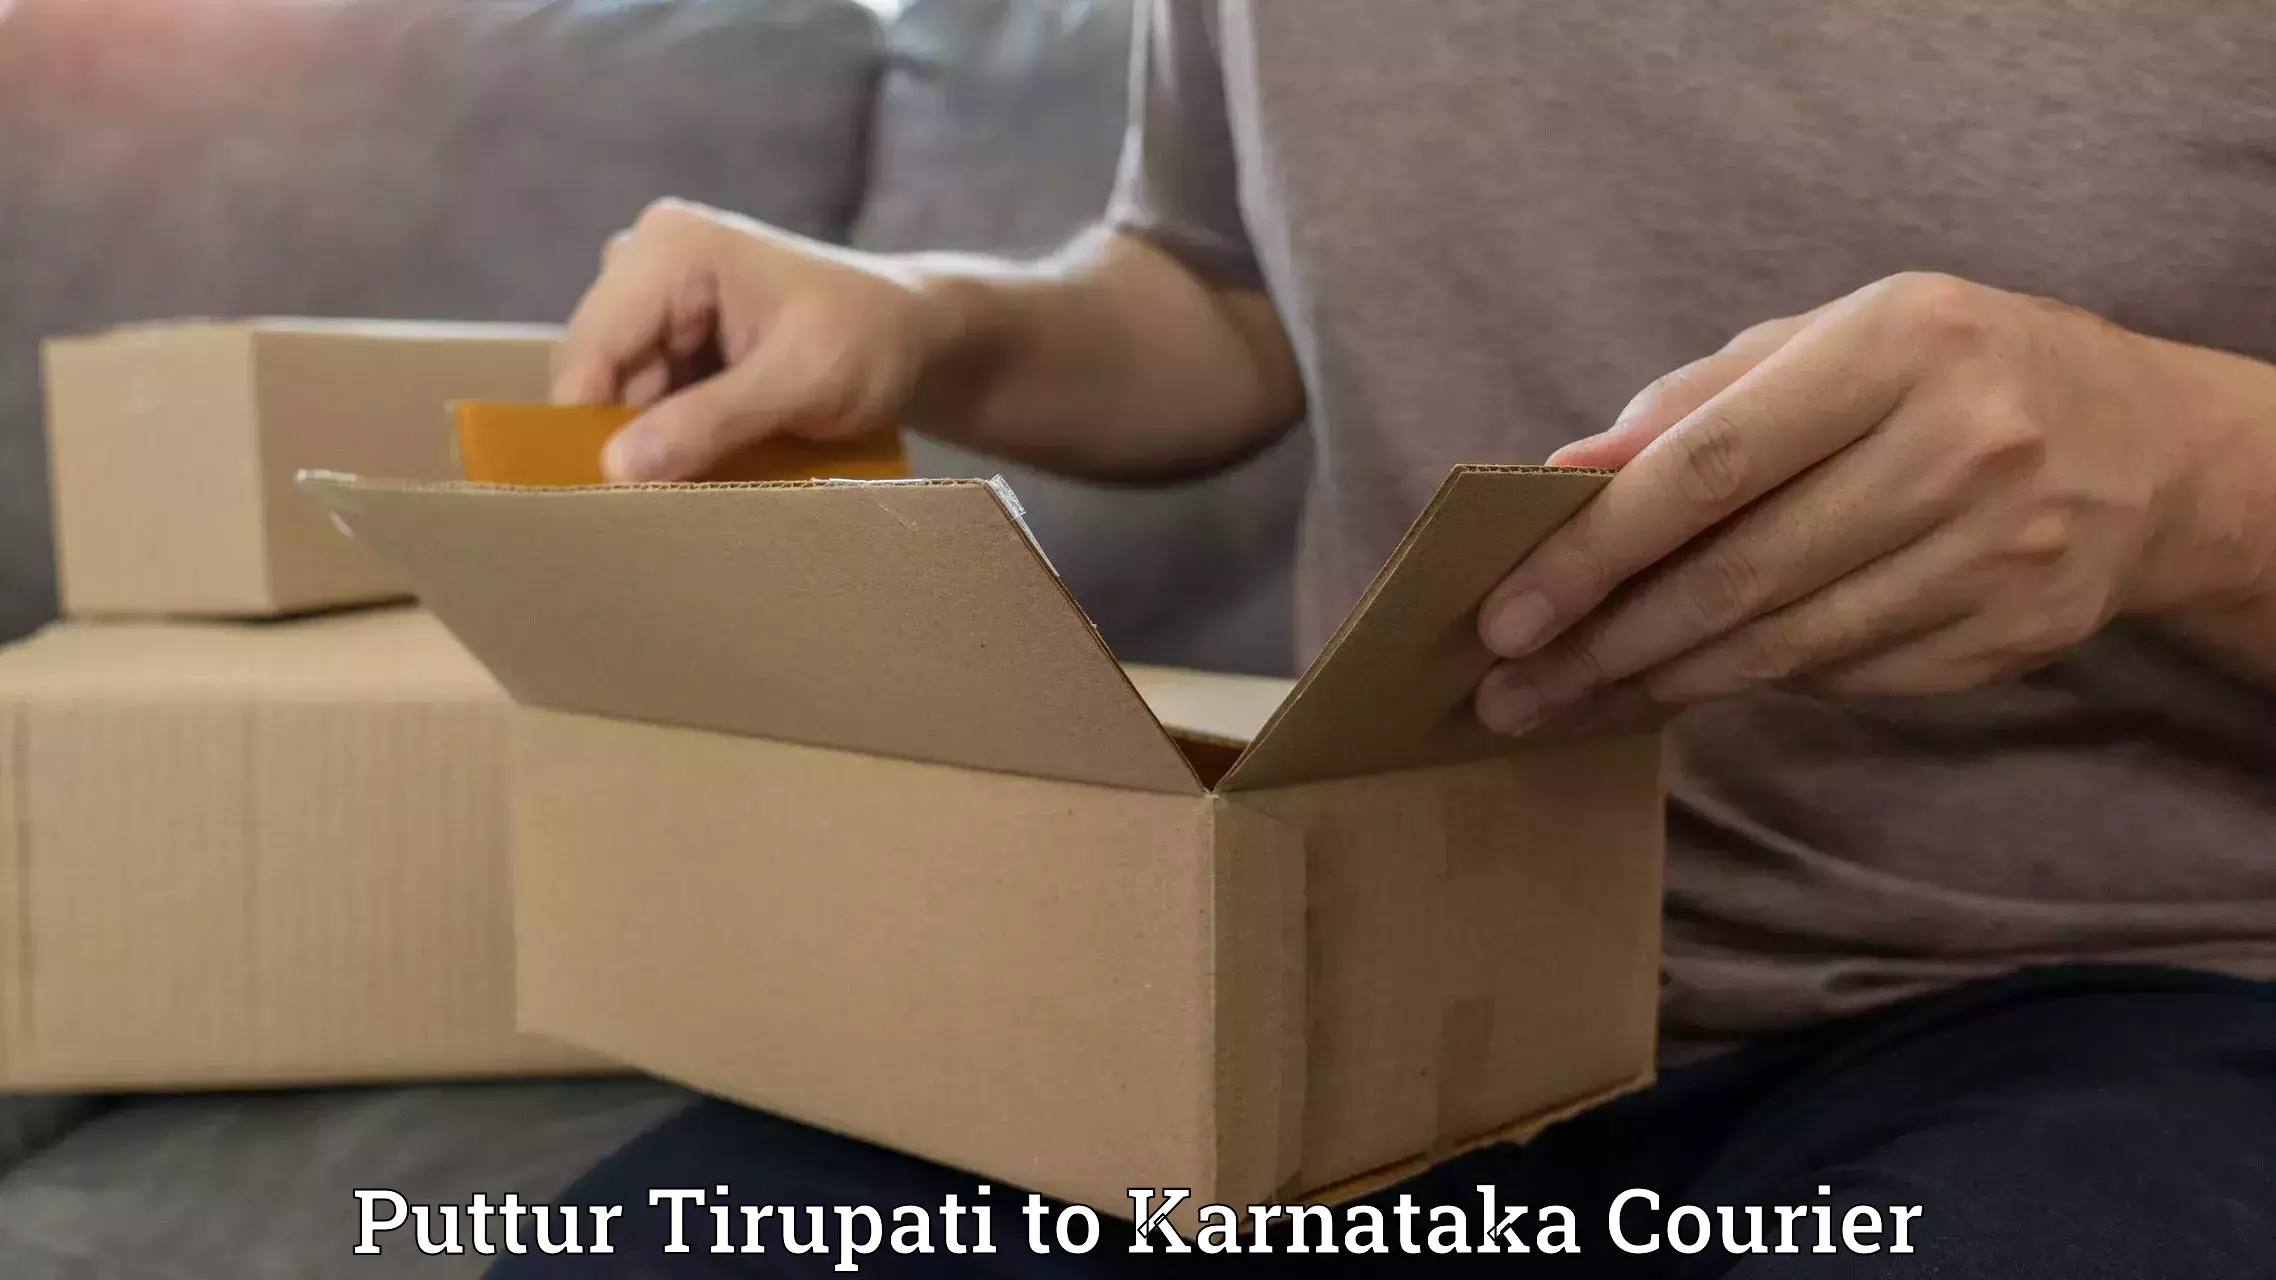 Business delivery service Puttur Tirupati to Uttara Kannada